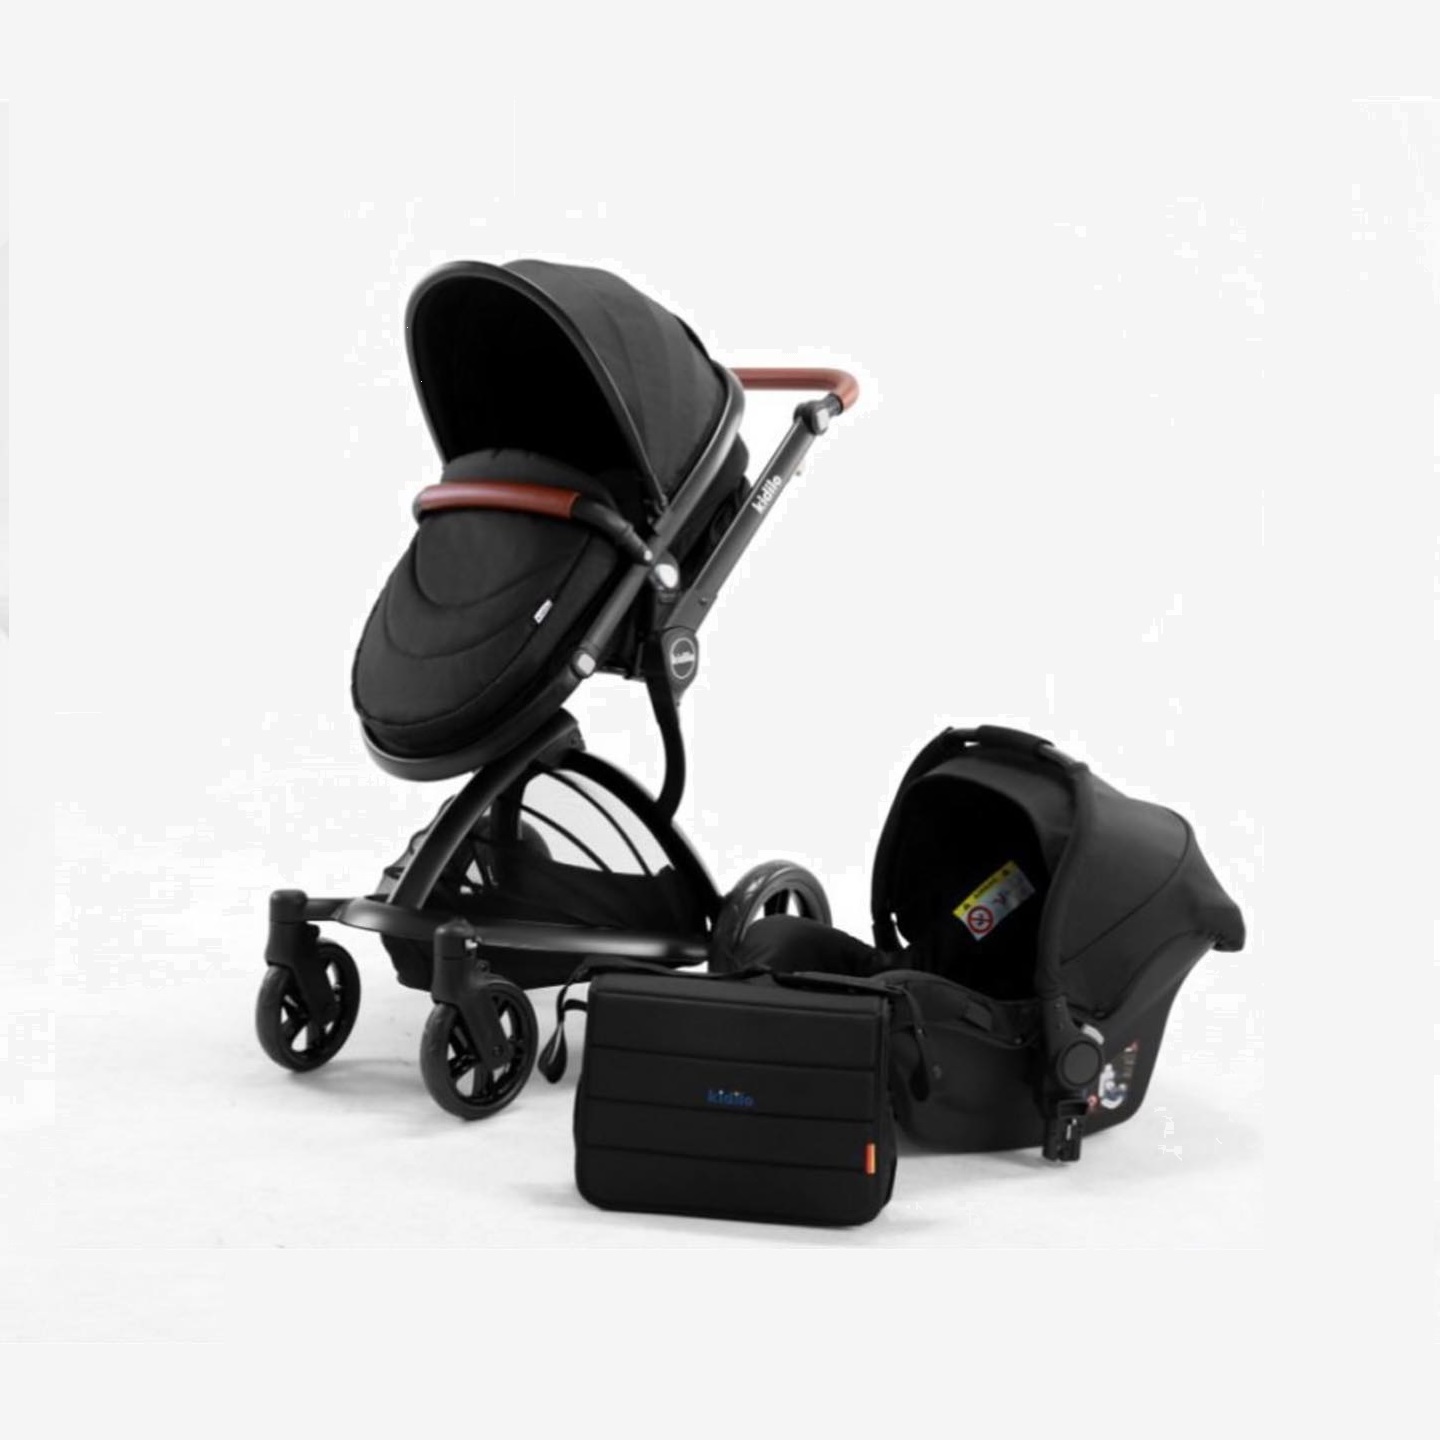 Kidilo G1650 baby stroller